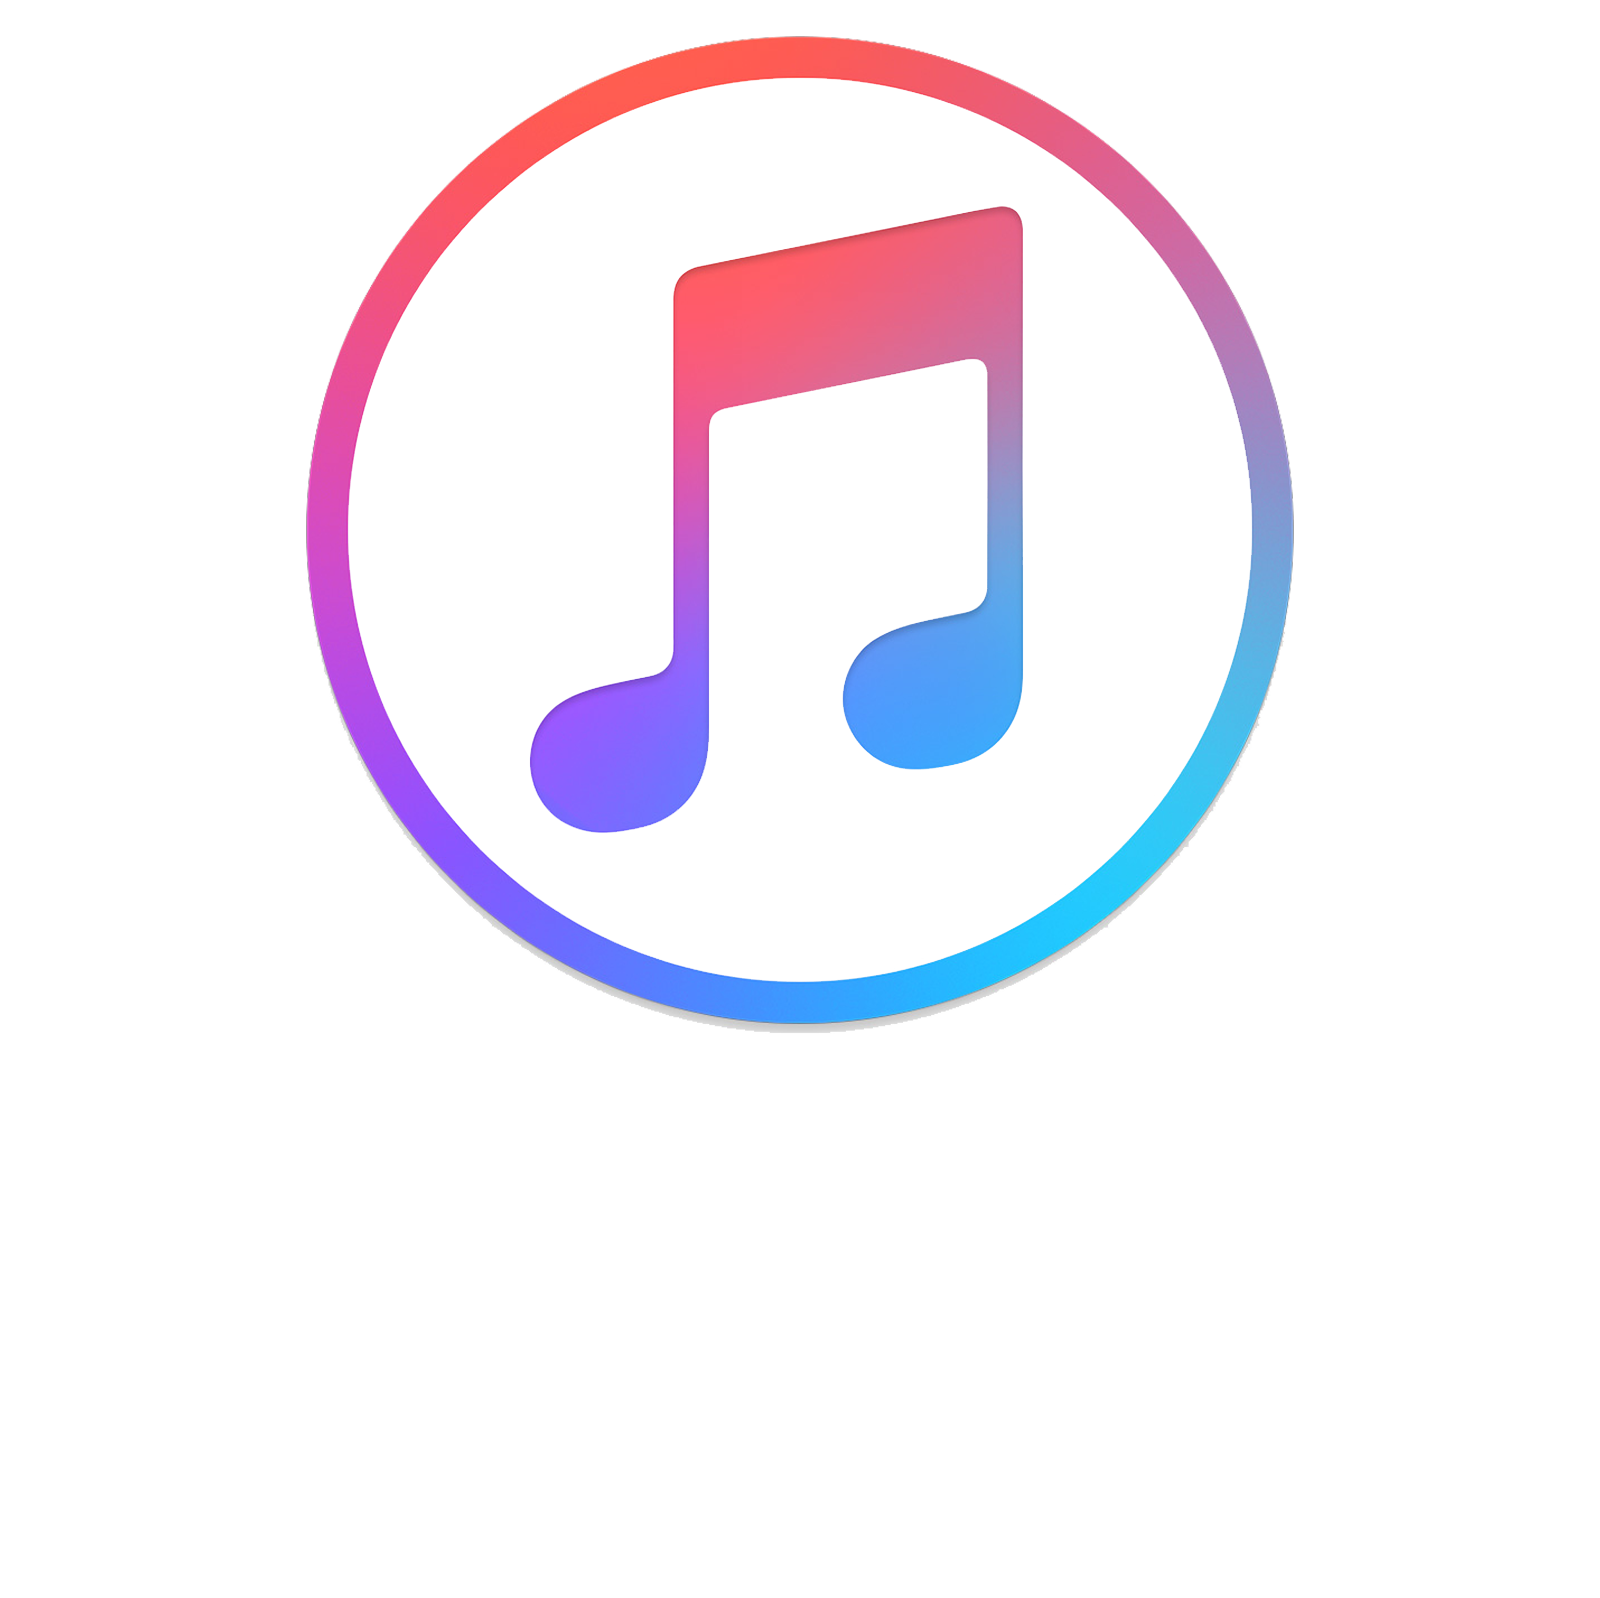 Значок е в музыке. Лого эпл Мьюзик. Музыкальный логотип. Иконка Apple Music. Музыка иконка.